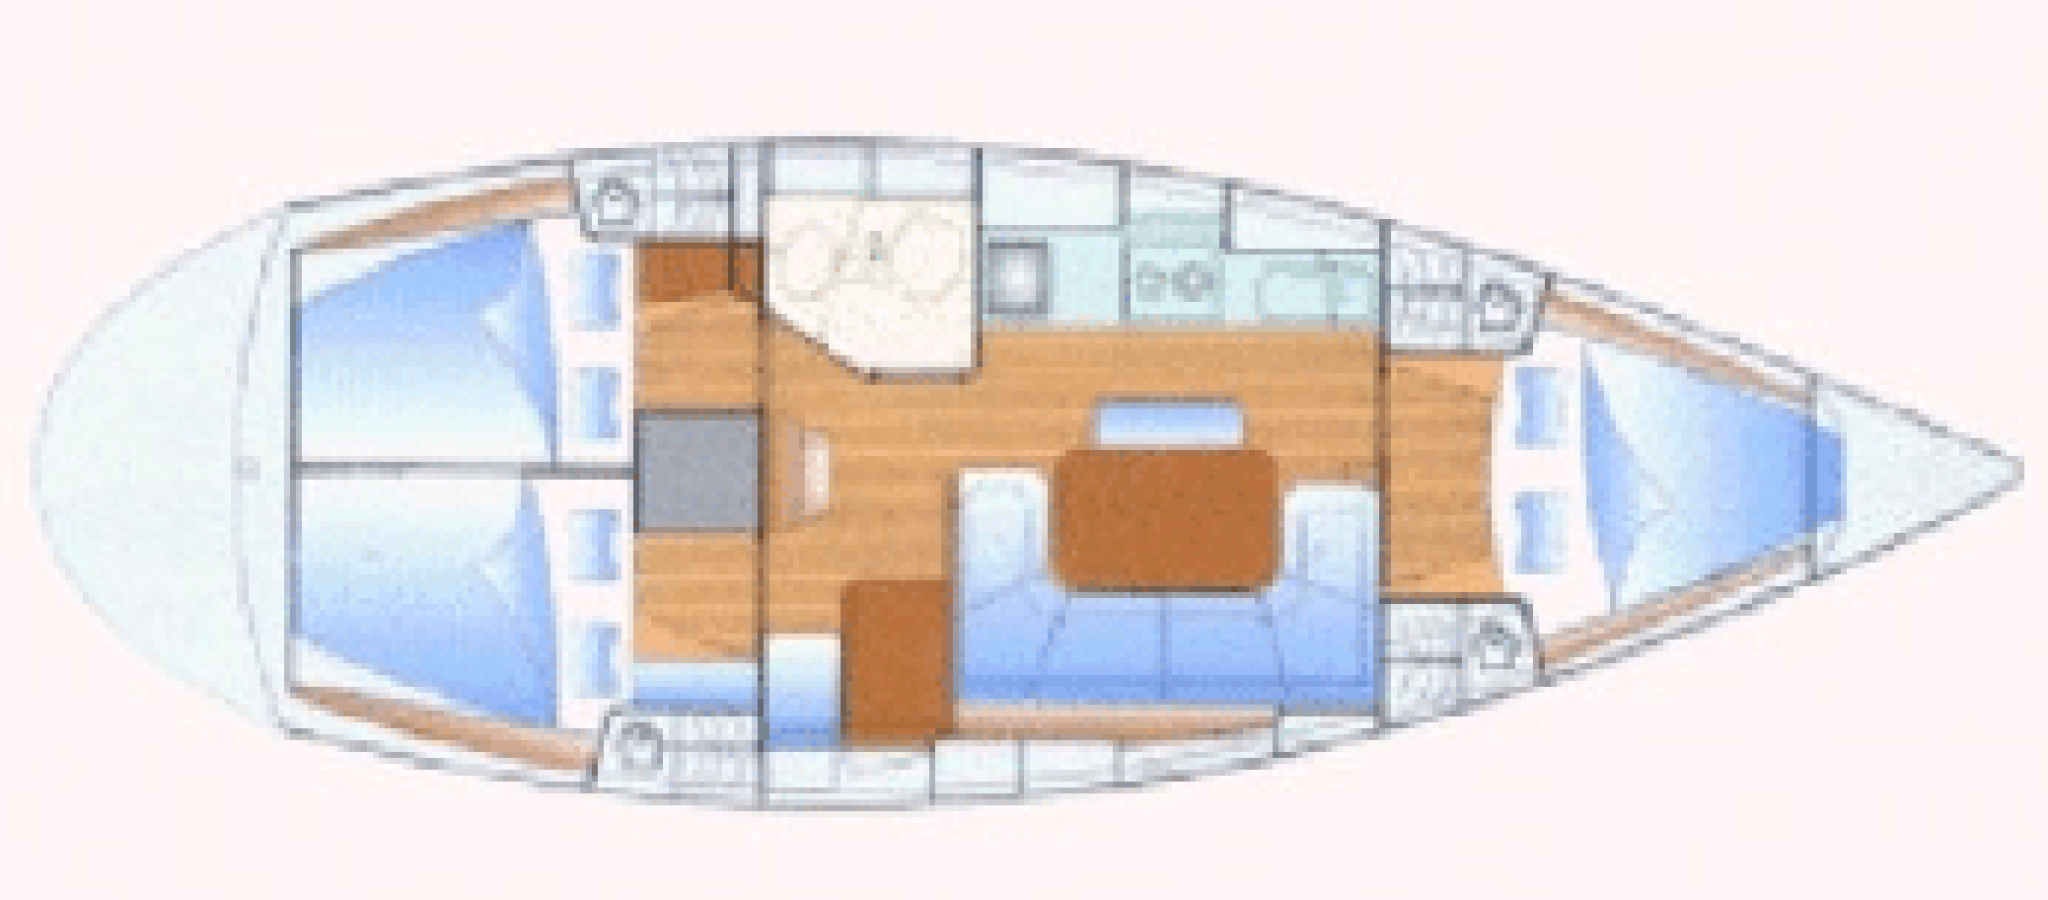 Bavaria 37 cruiser plan 3 cabines